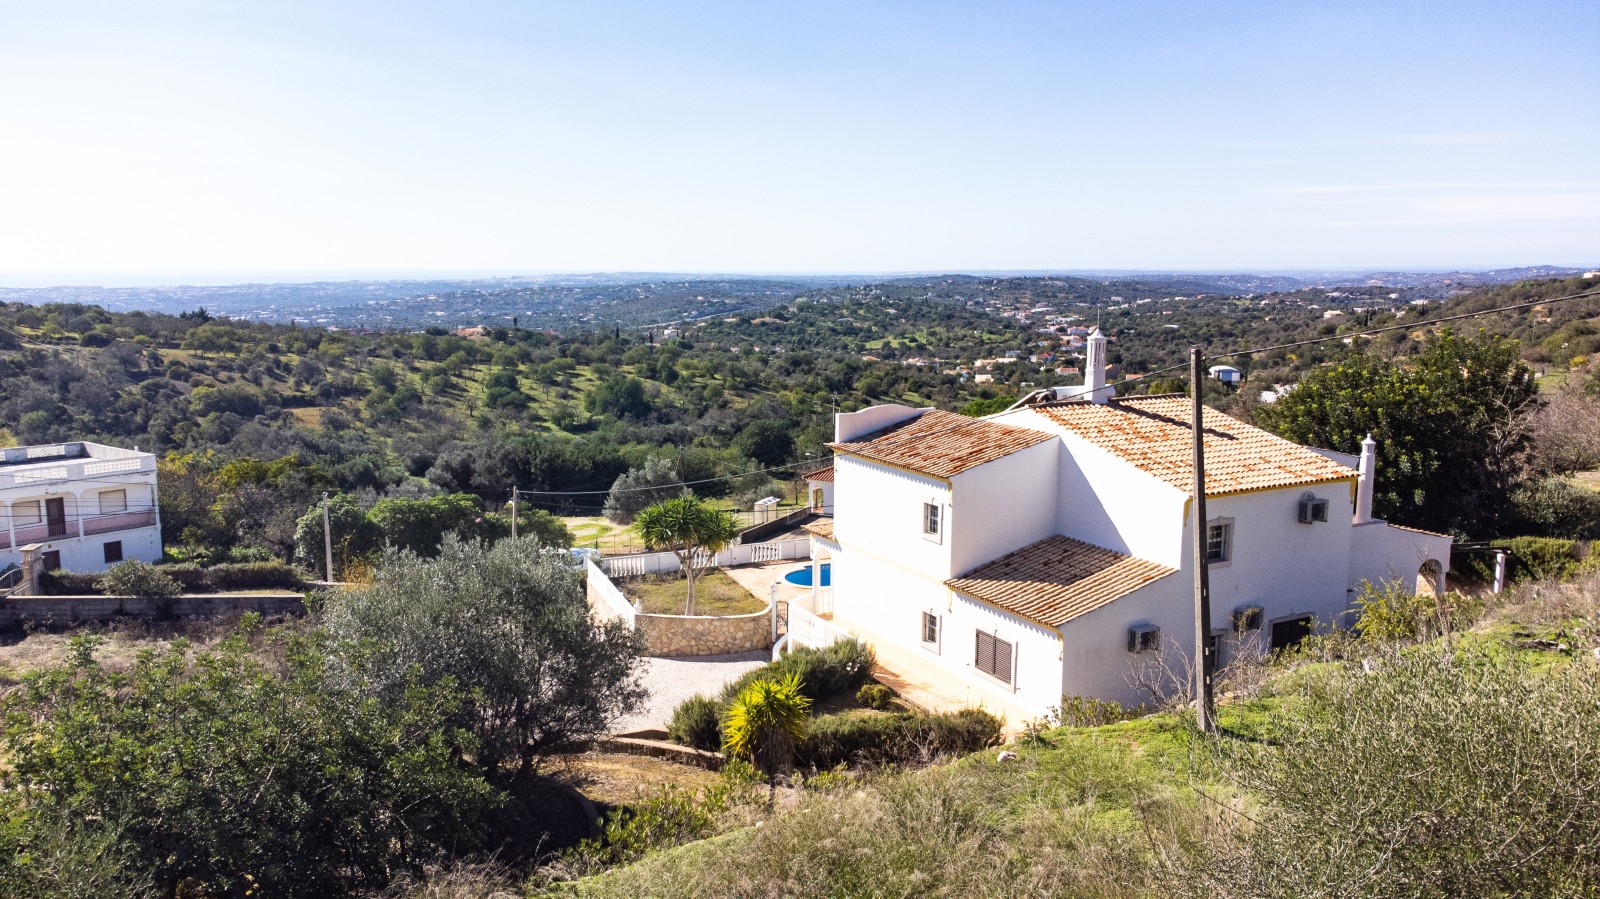 4-Bedroom Villa, and land, for sale in Boliqueime, Loulé, Algarve_245318